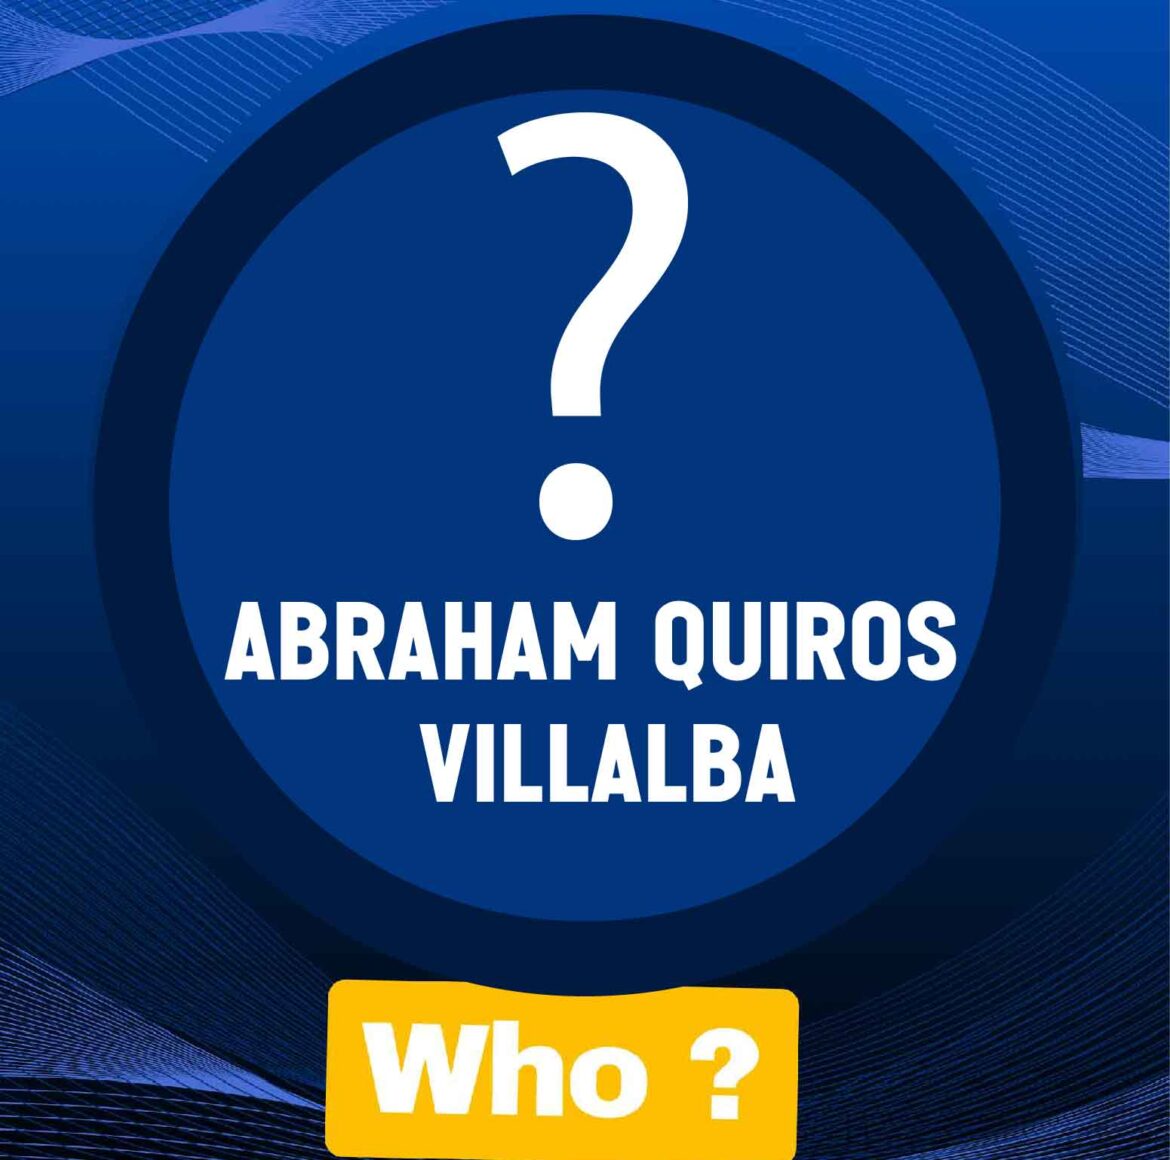 Abraham Quiros Villalba: An Inspirational Journey of Entrepreneurial Success